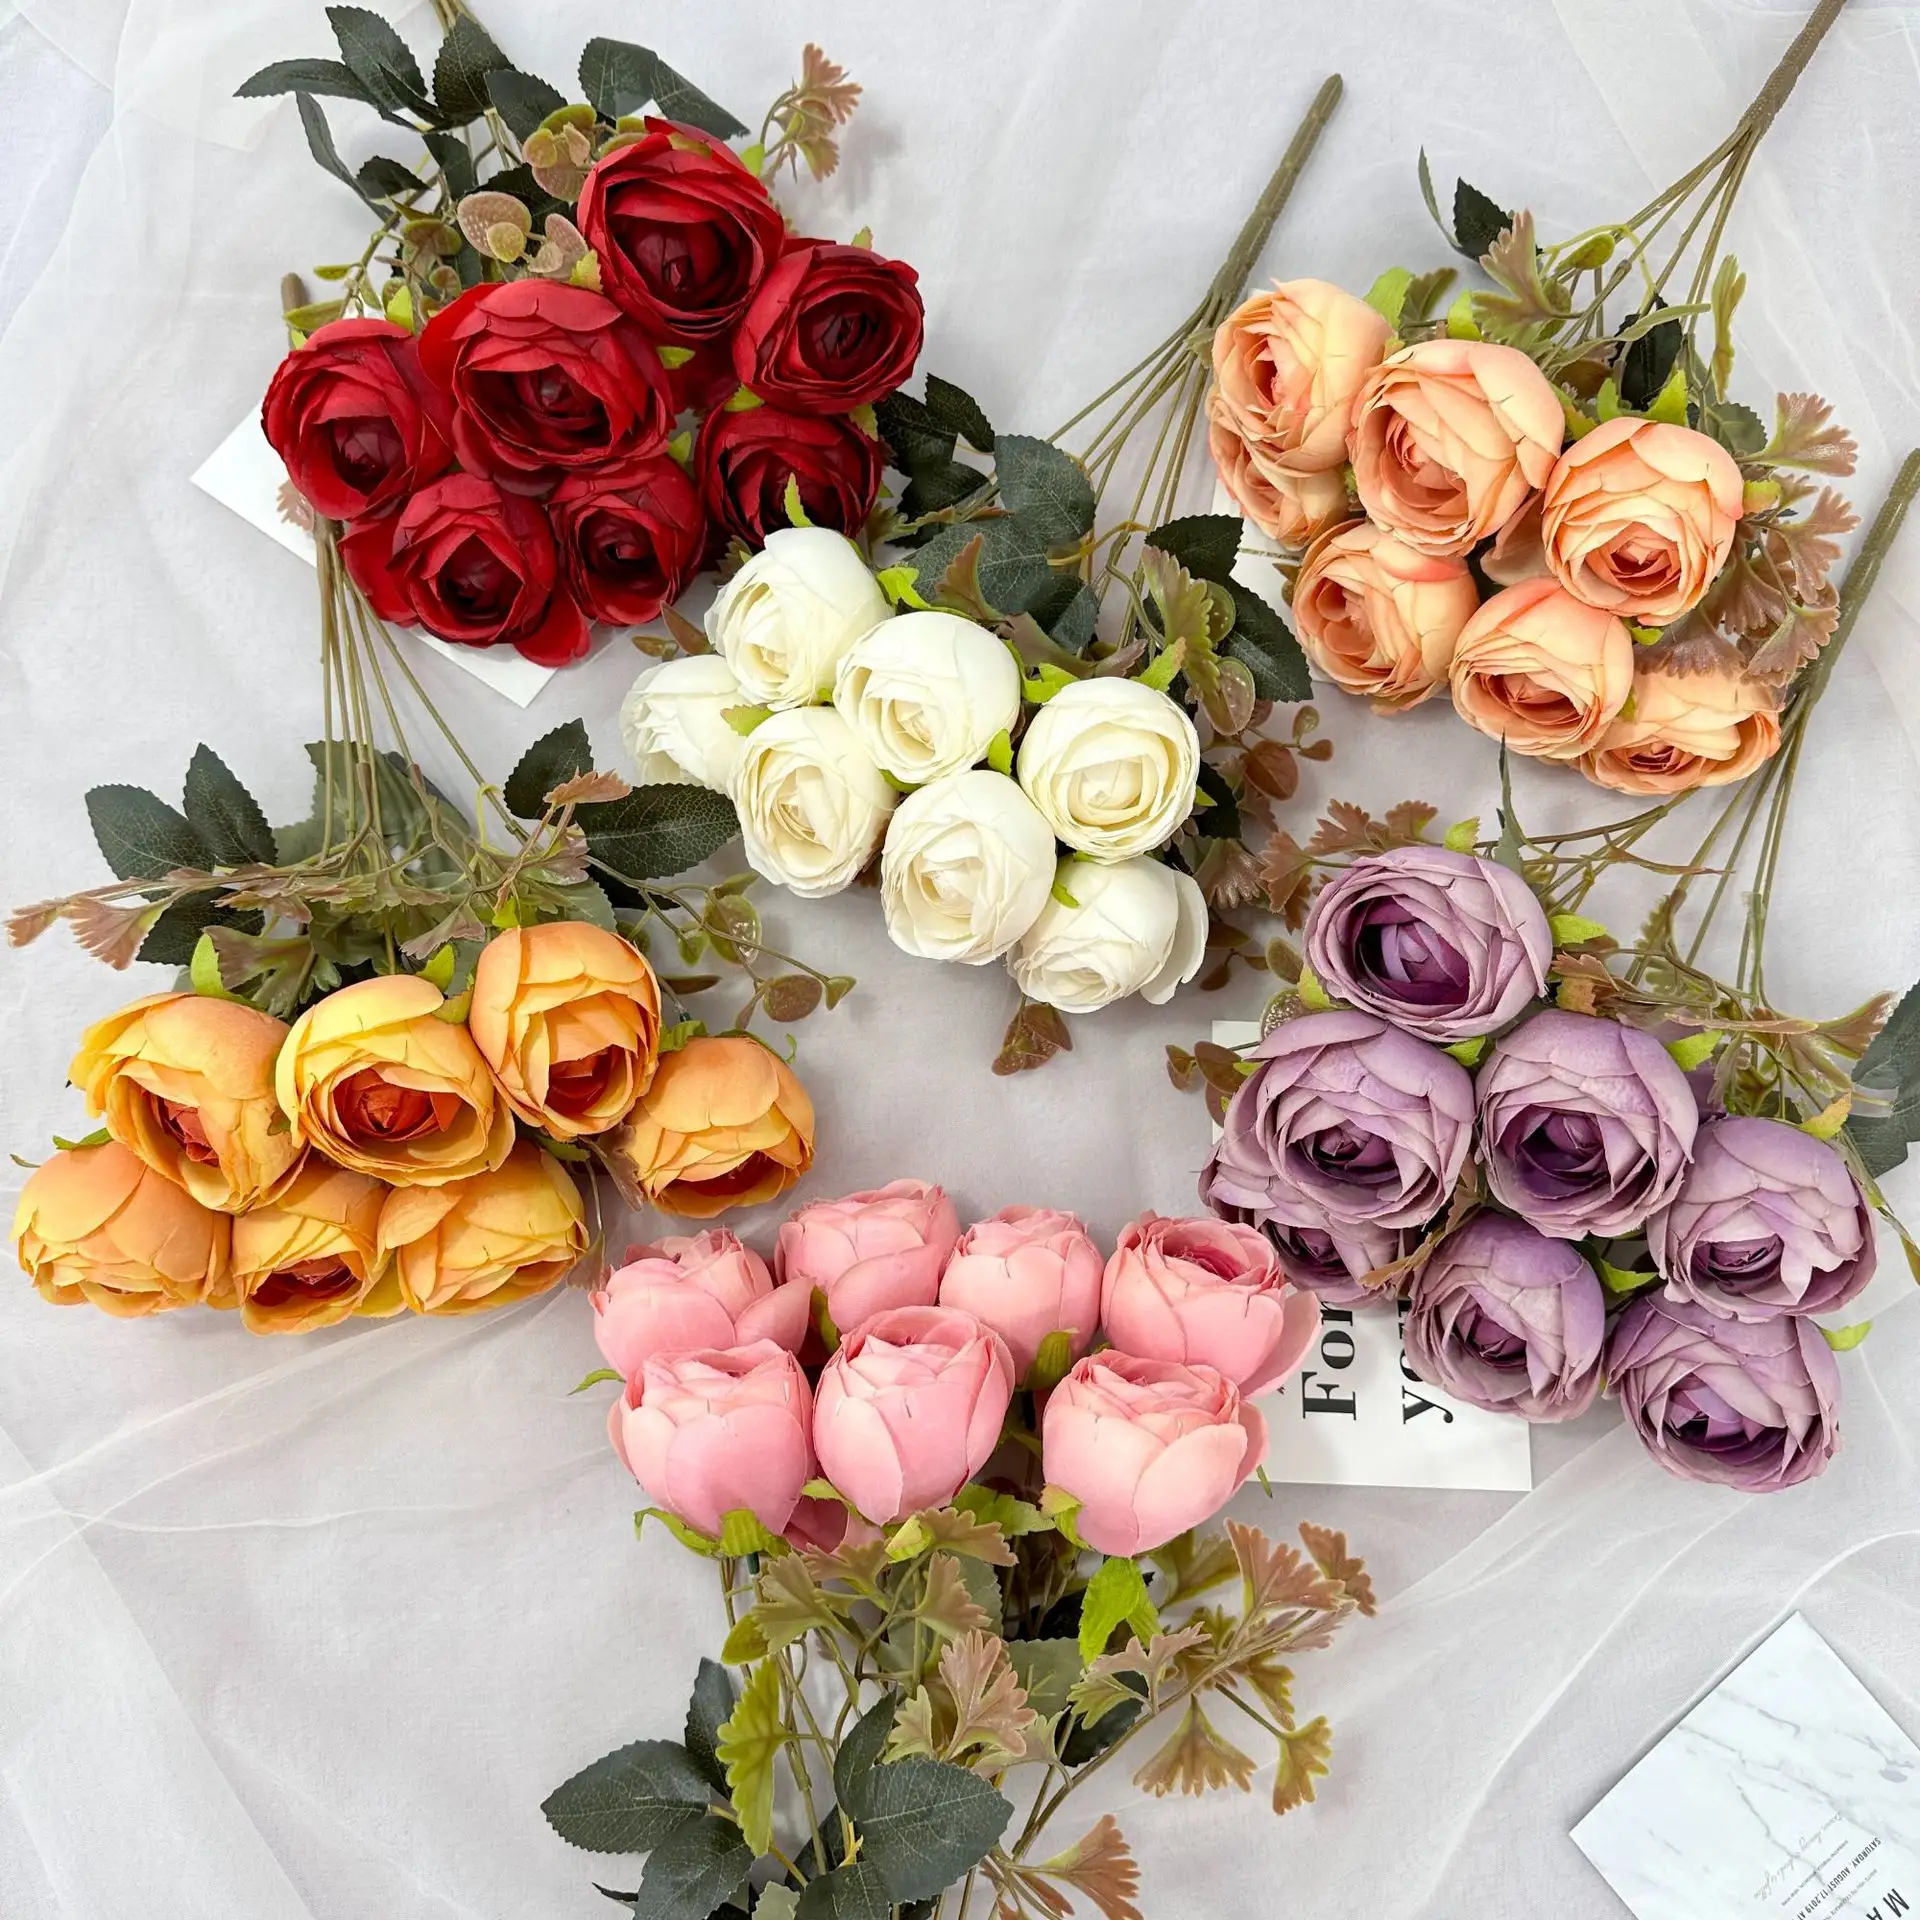 EG-G775 ดอกกุหลาบยางเทียมดอกกุหลาบผ้าไหมเทียมงานแต่งงานตกแต่งดอกไม้